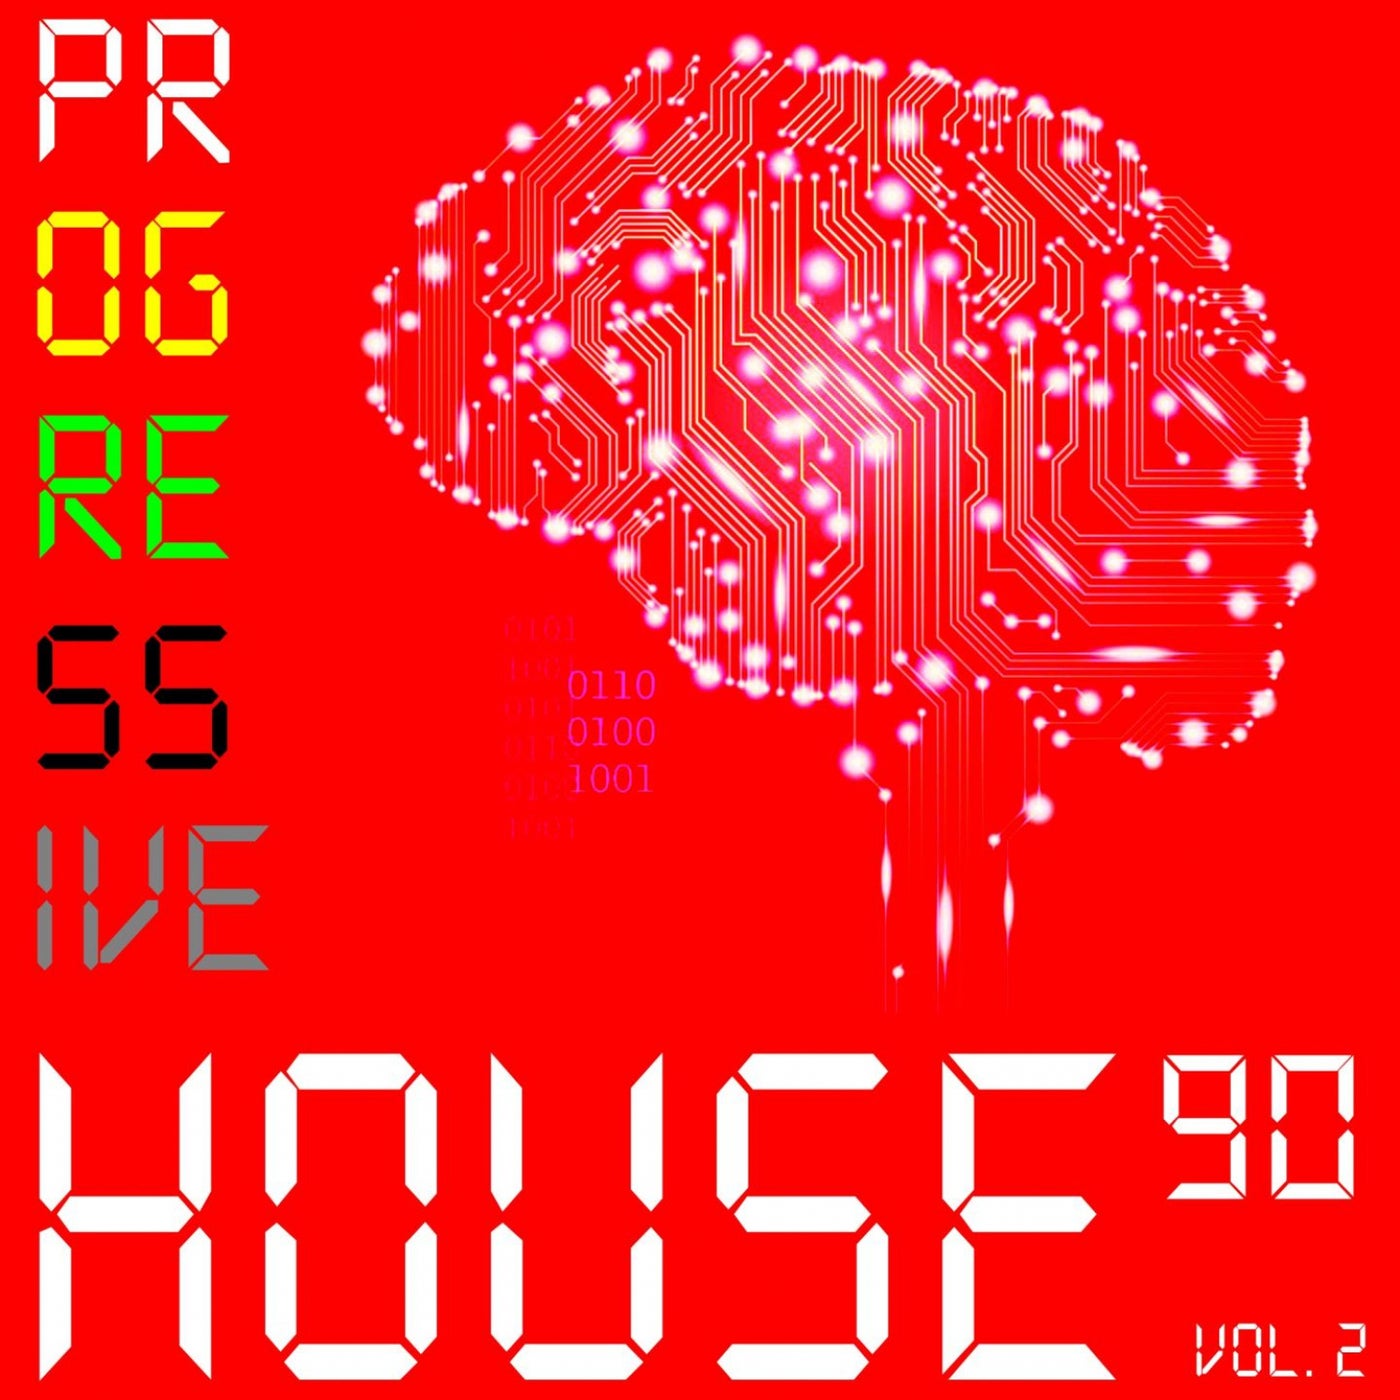 Progressive House 90, Vol. 2